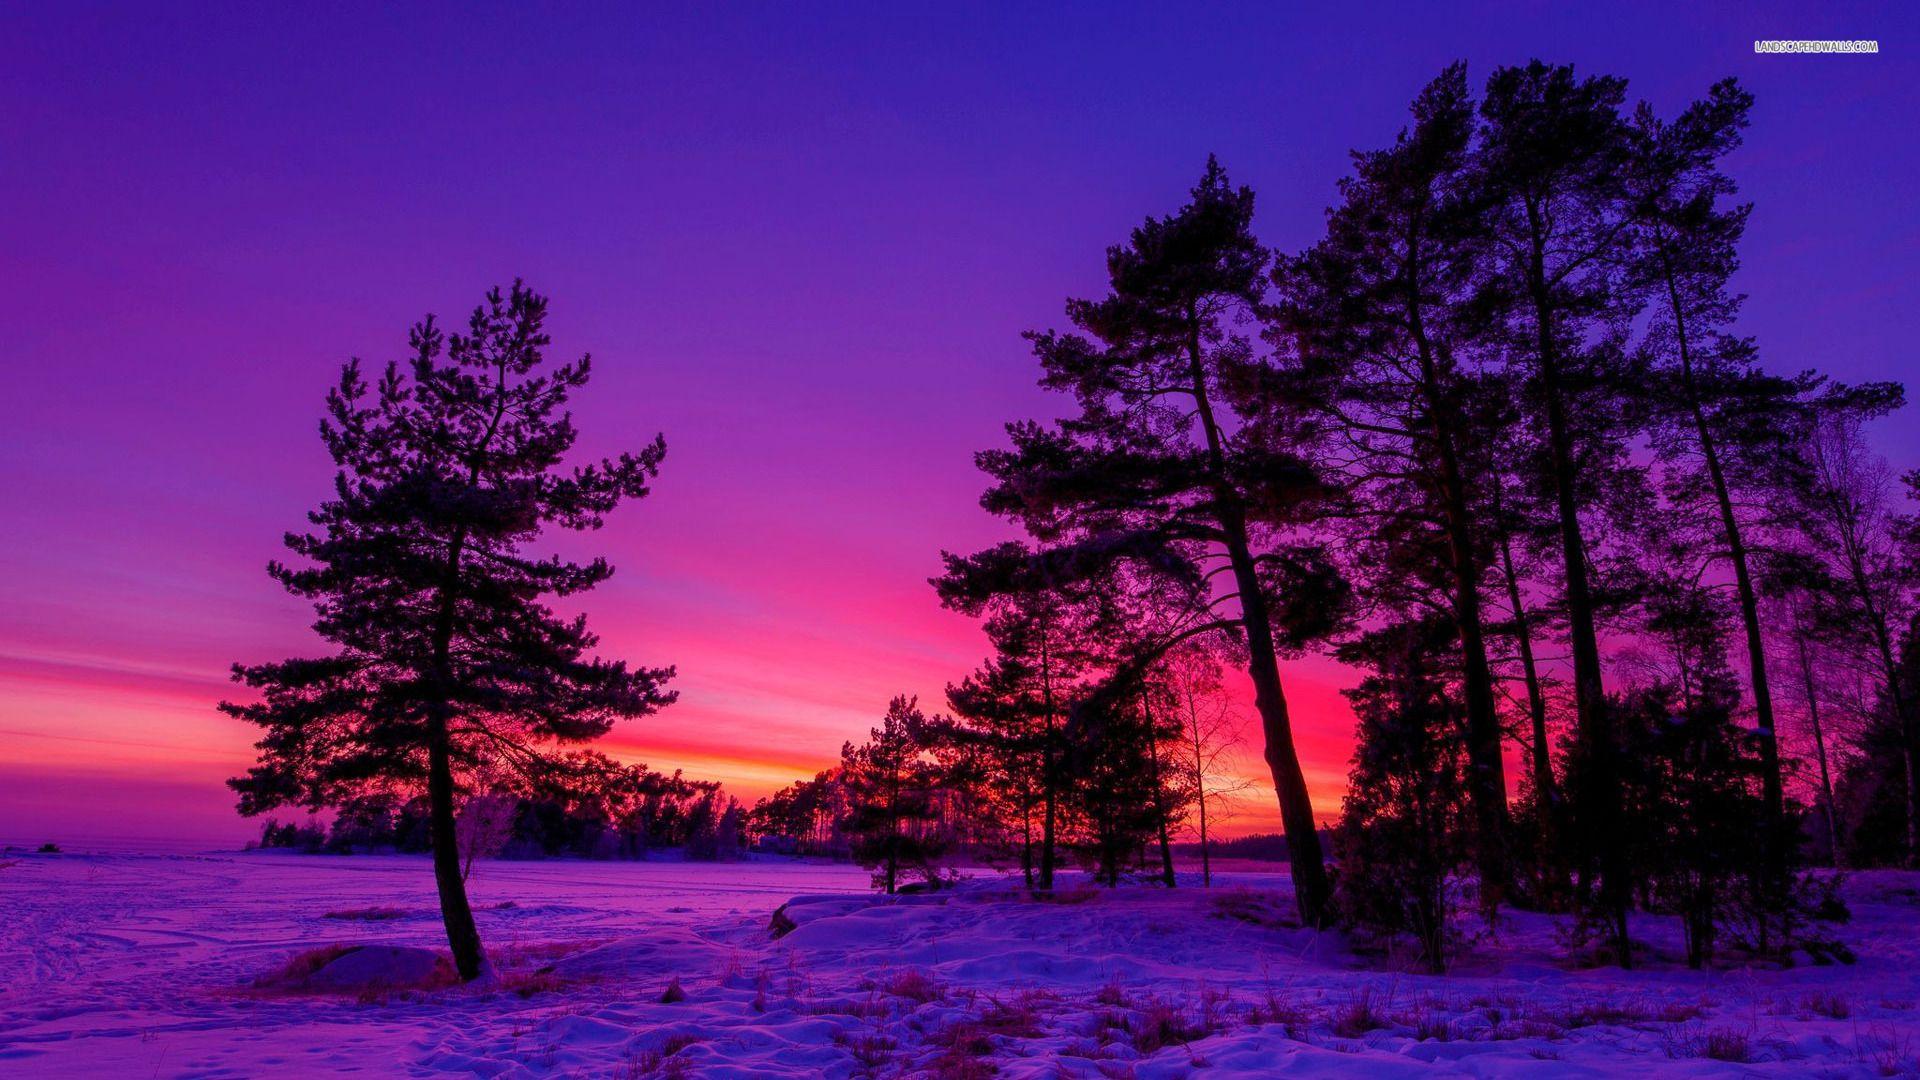 google search. Sunset wallpaper, Scenic photo, Winter sunset